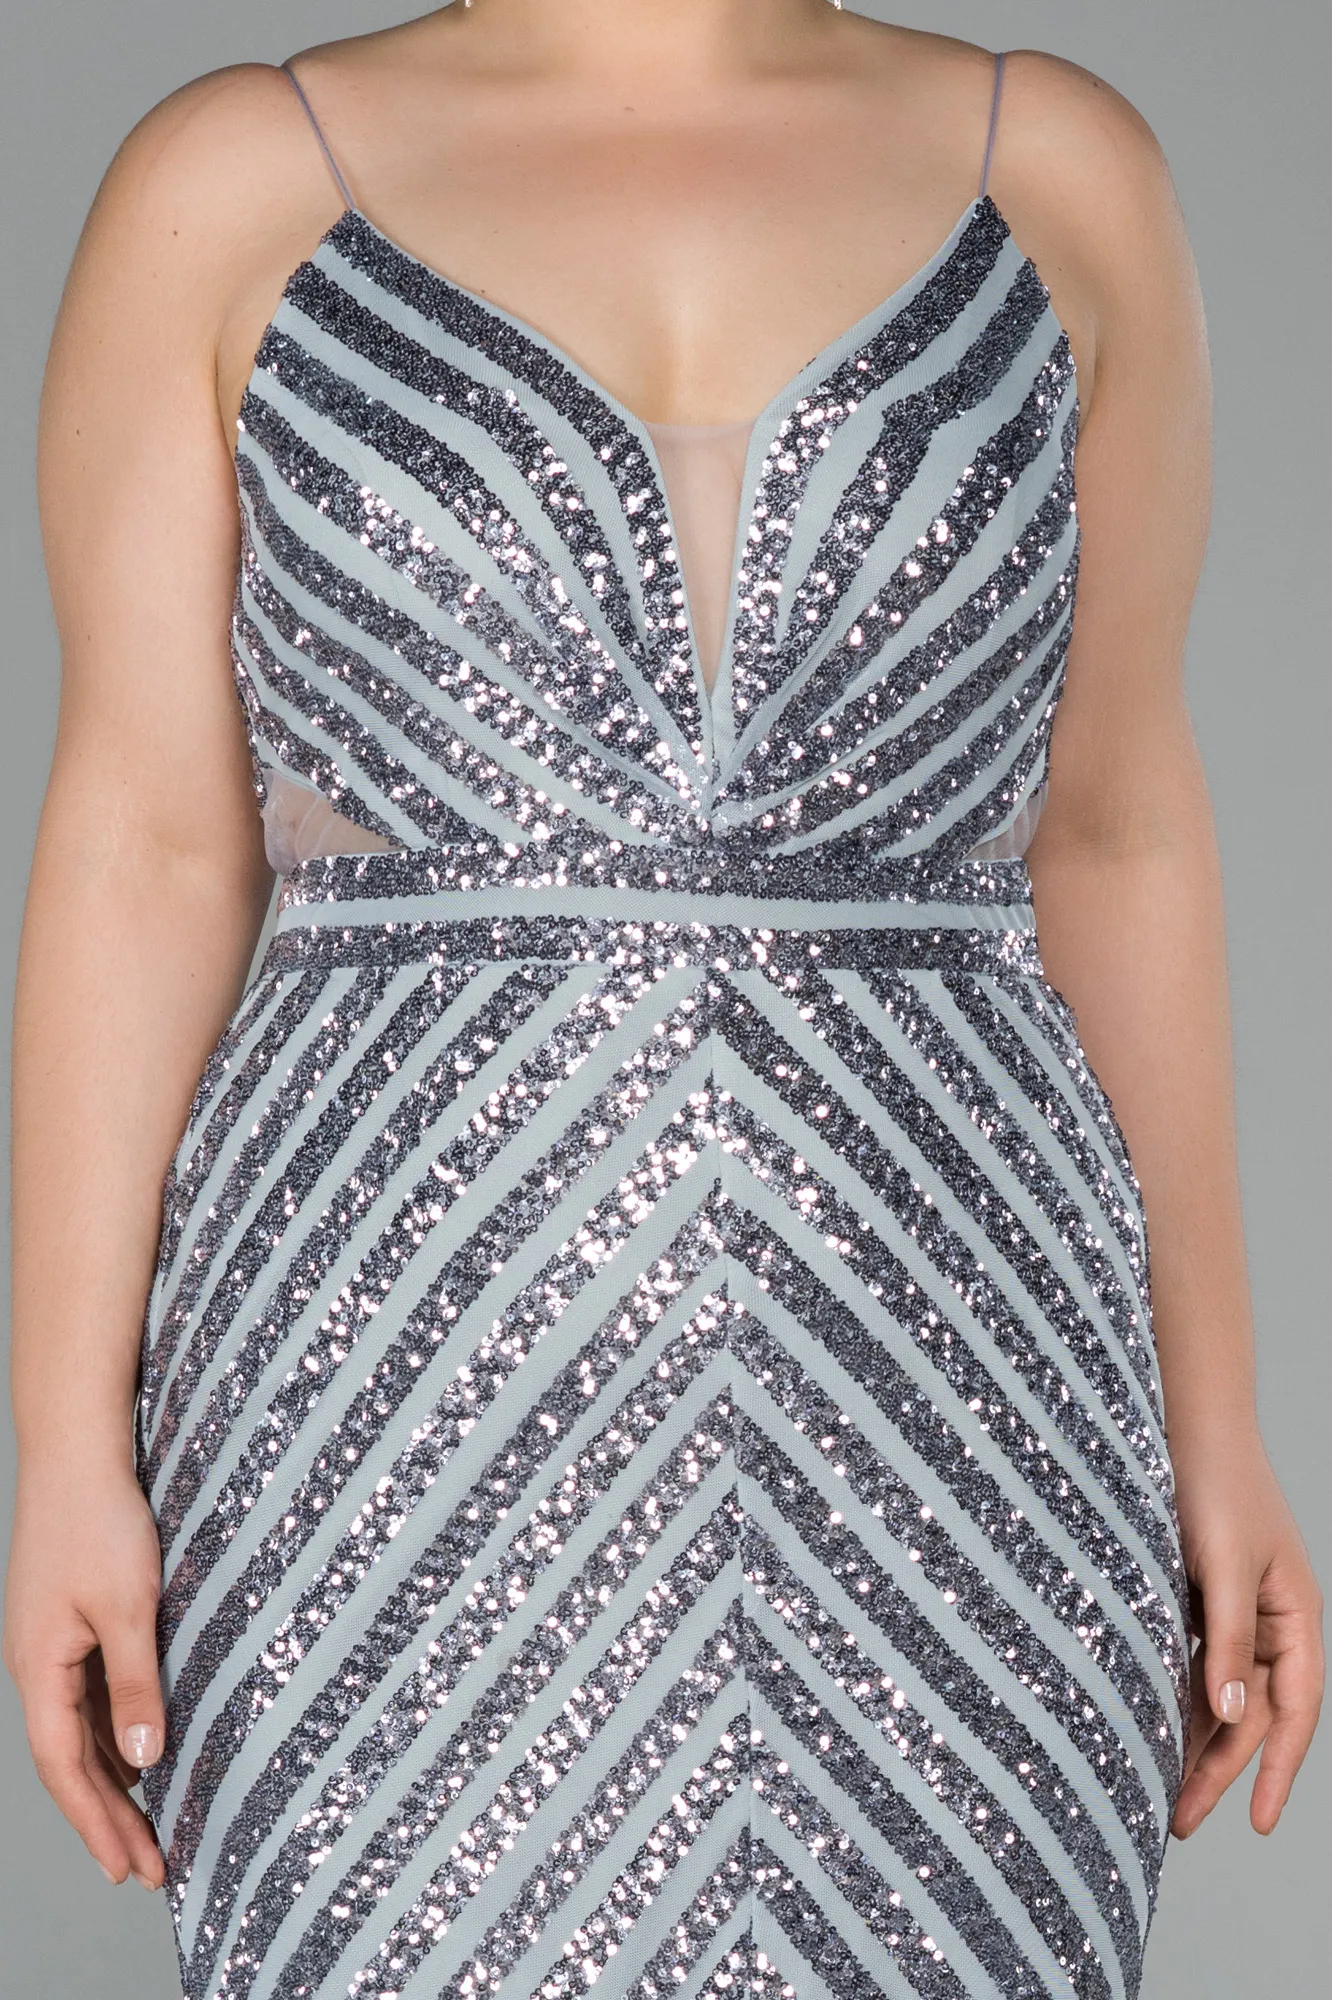 Grey-Long Plus Size Evening Dress ABU1661